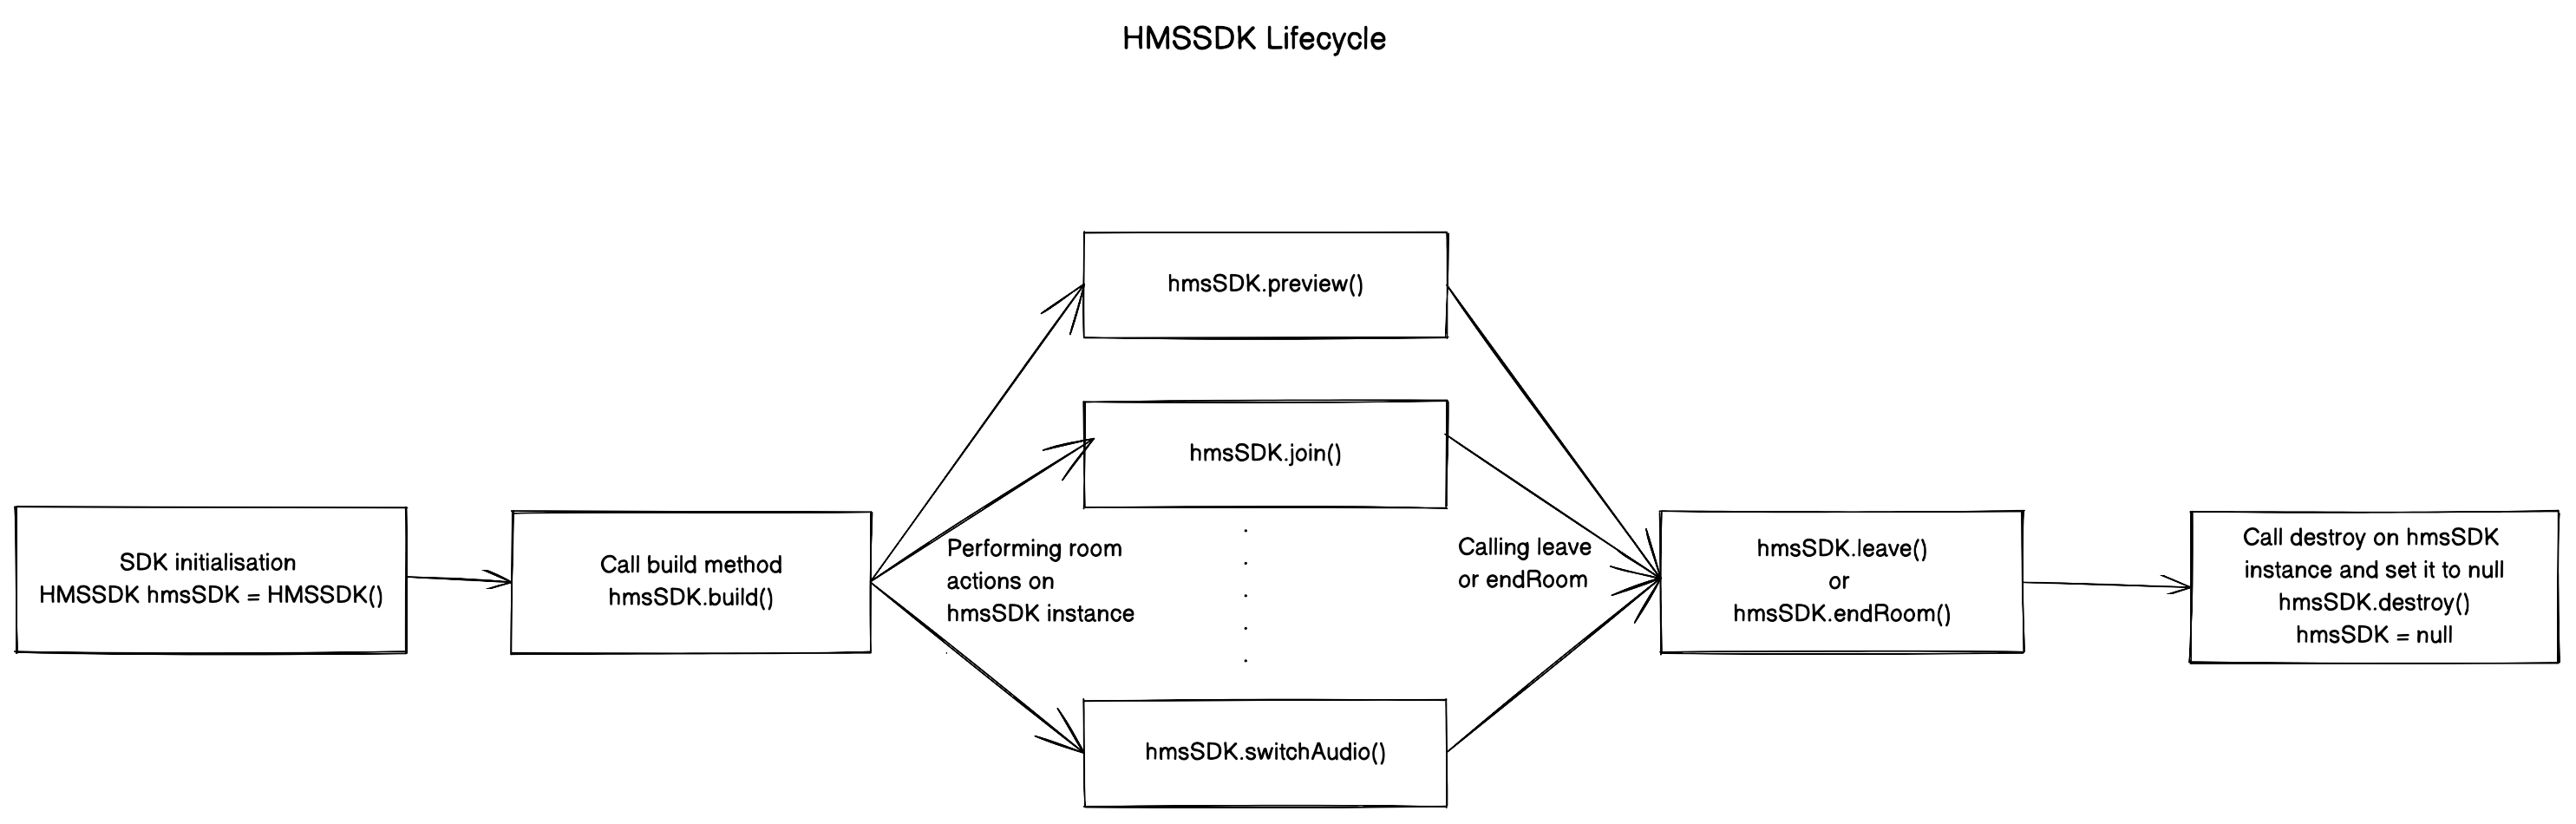 HMSSDK lifecycle